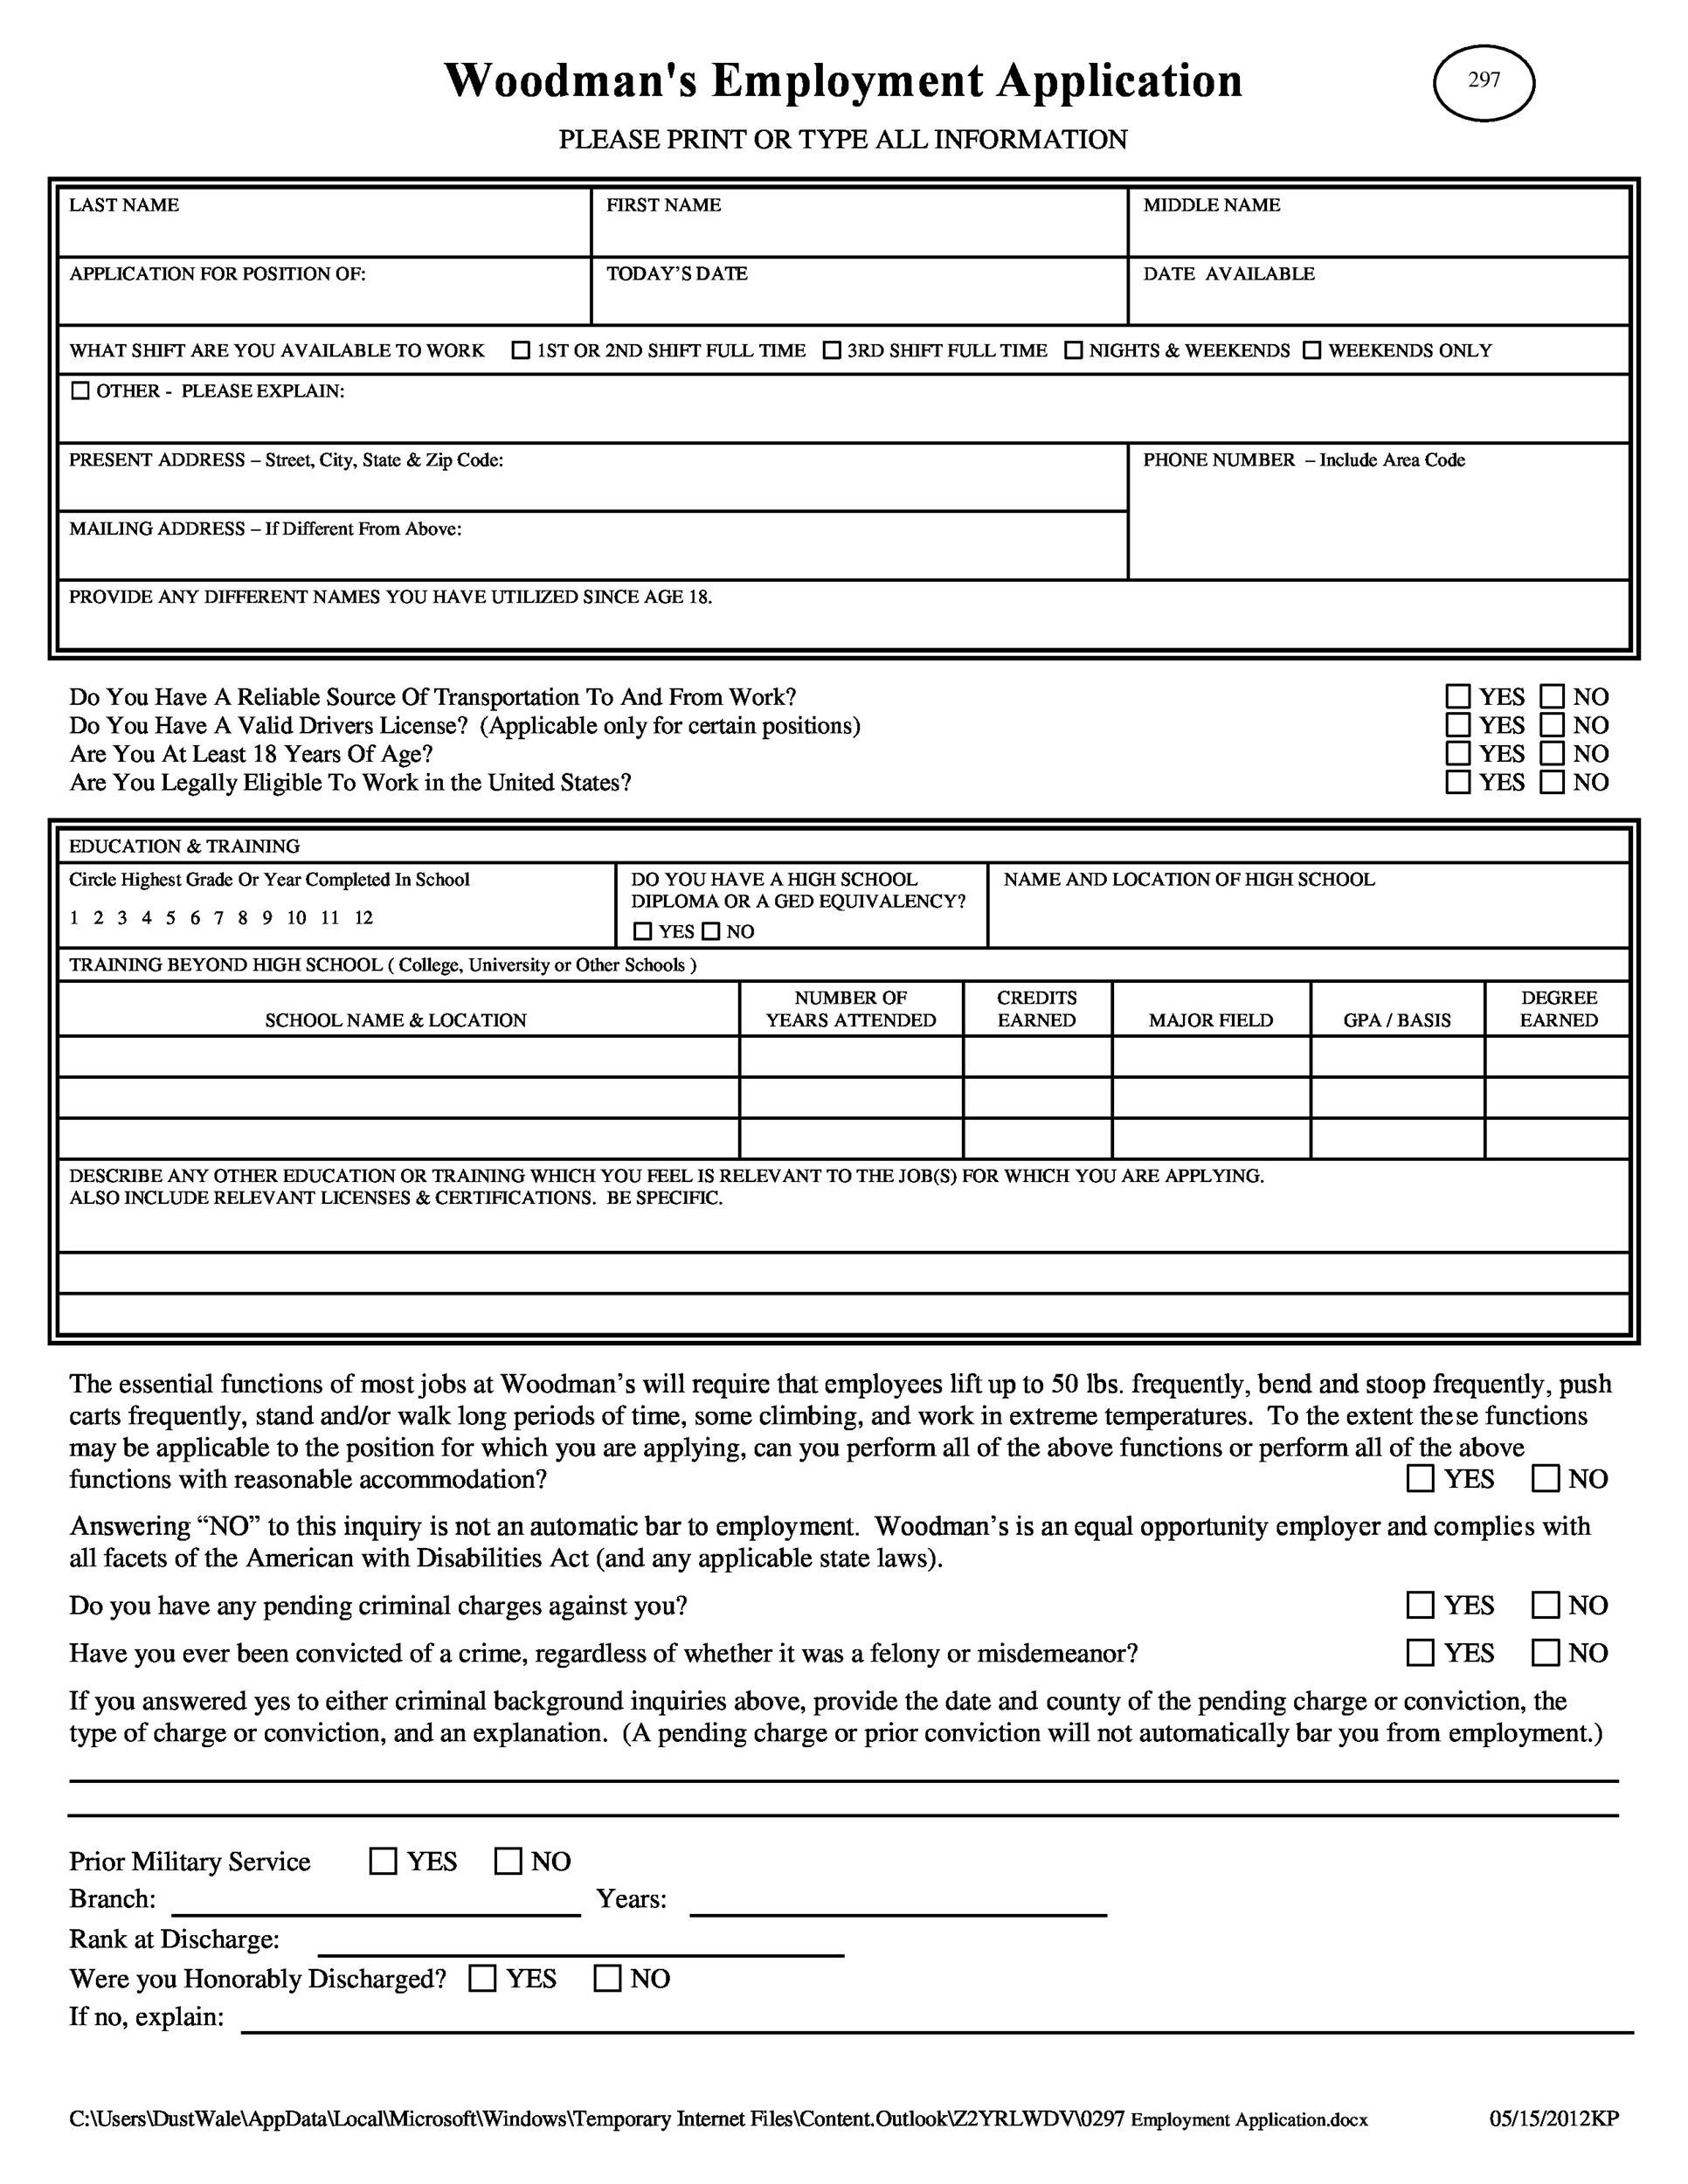 Free Printable Job Application Form Template from templatelab.com